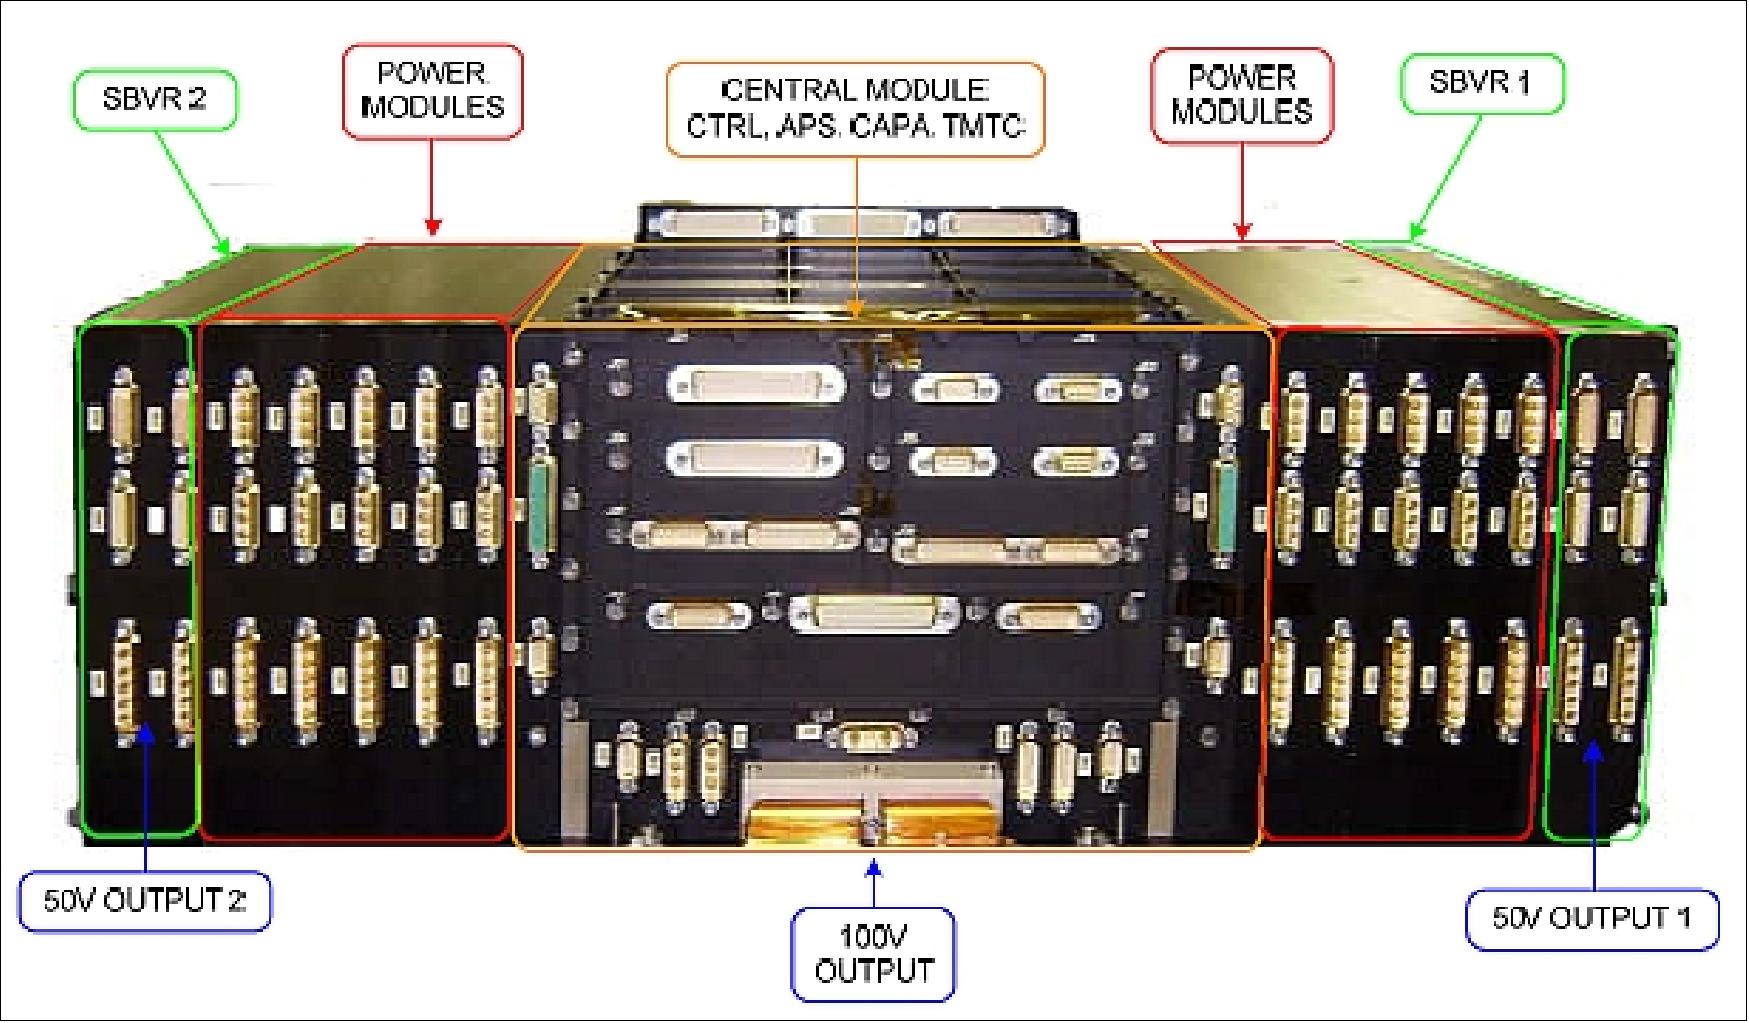 Figure 7: The PSR100V unit with 10 PMs and 2 SBVRs (image credit: Astrium SAS)